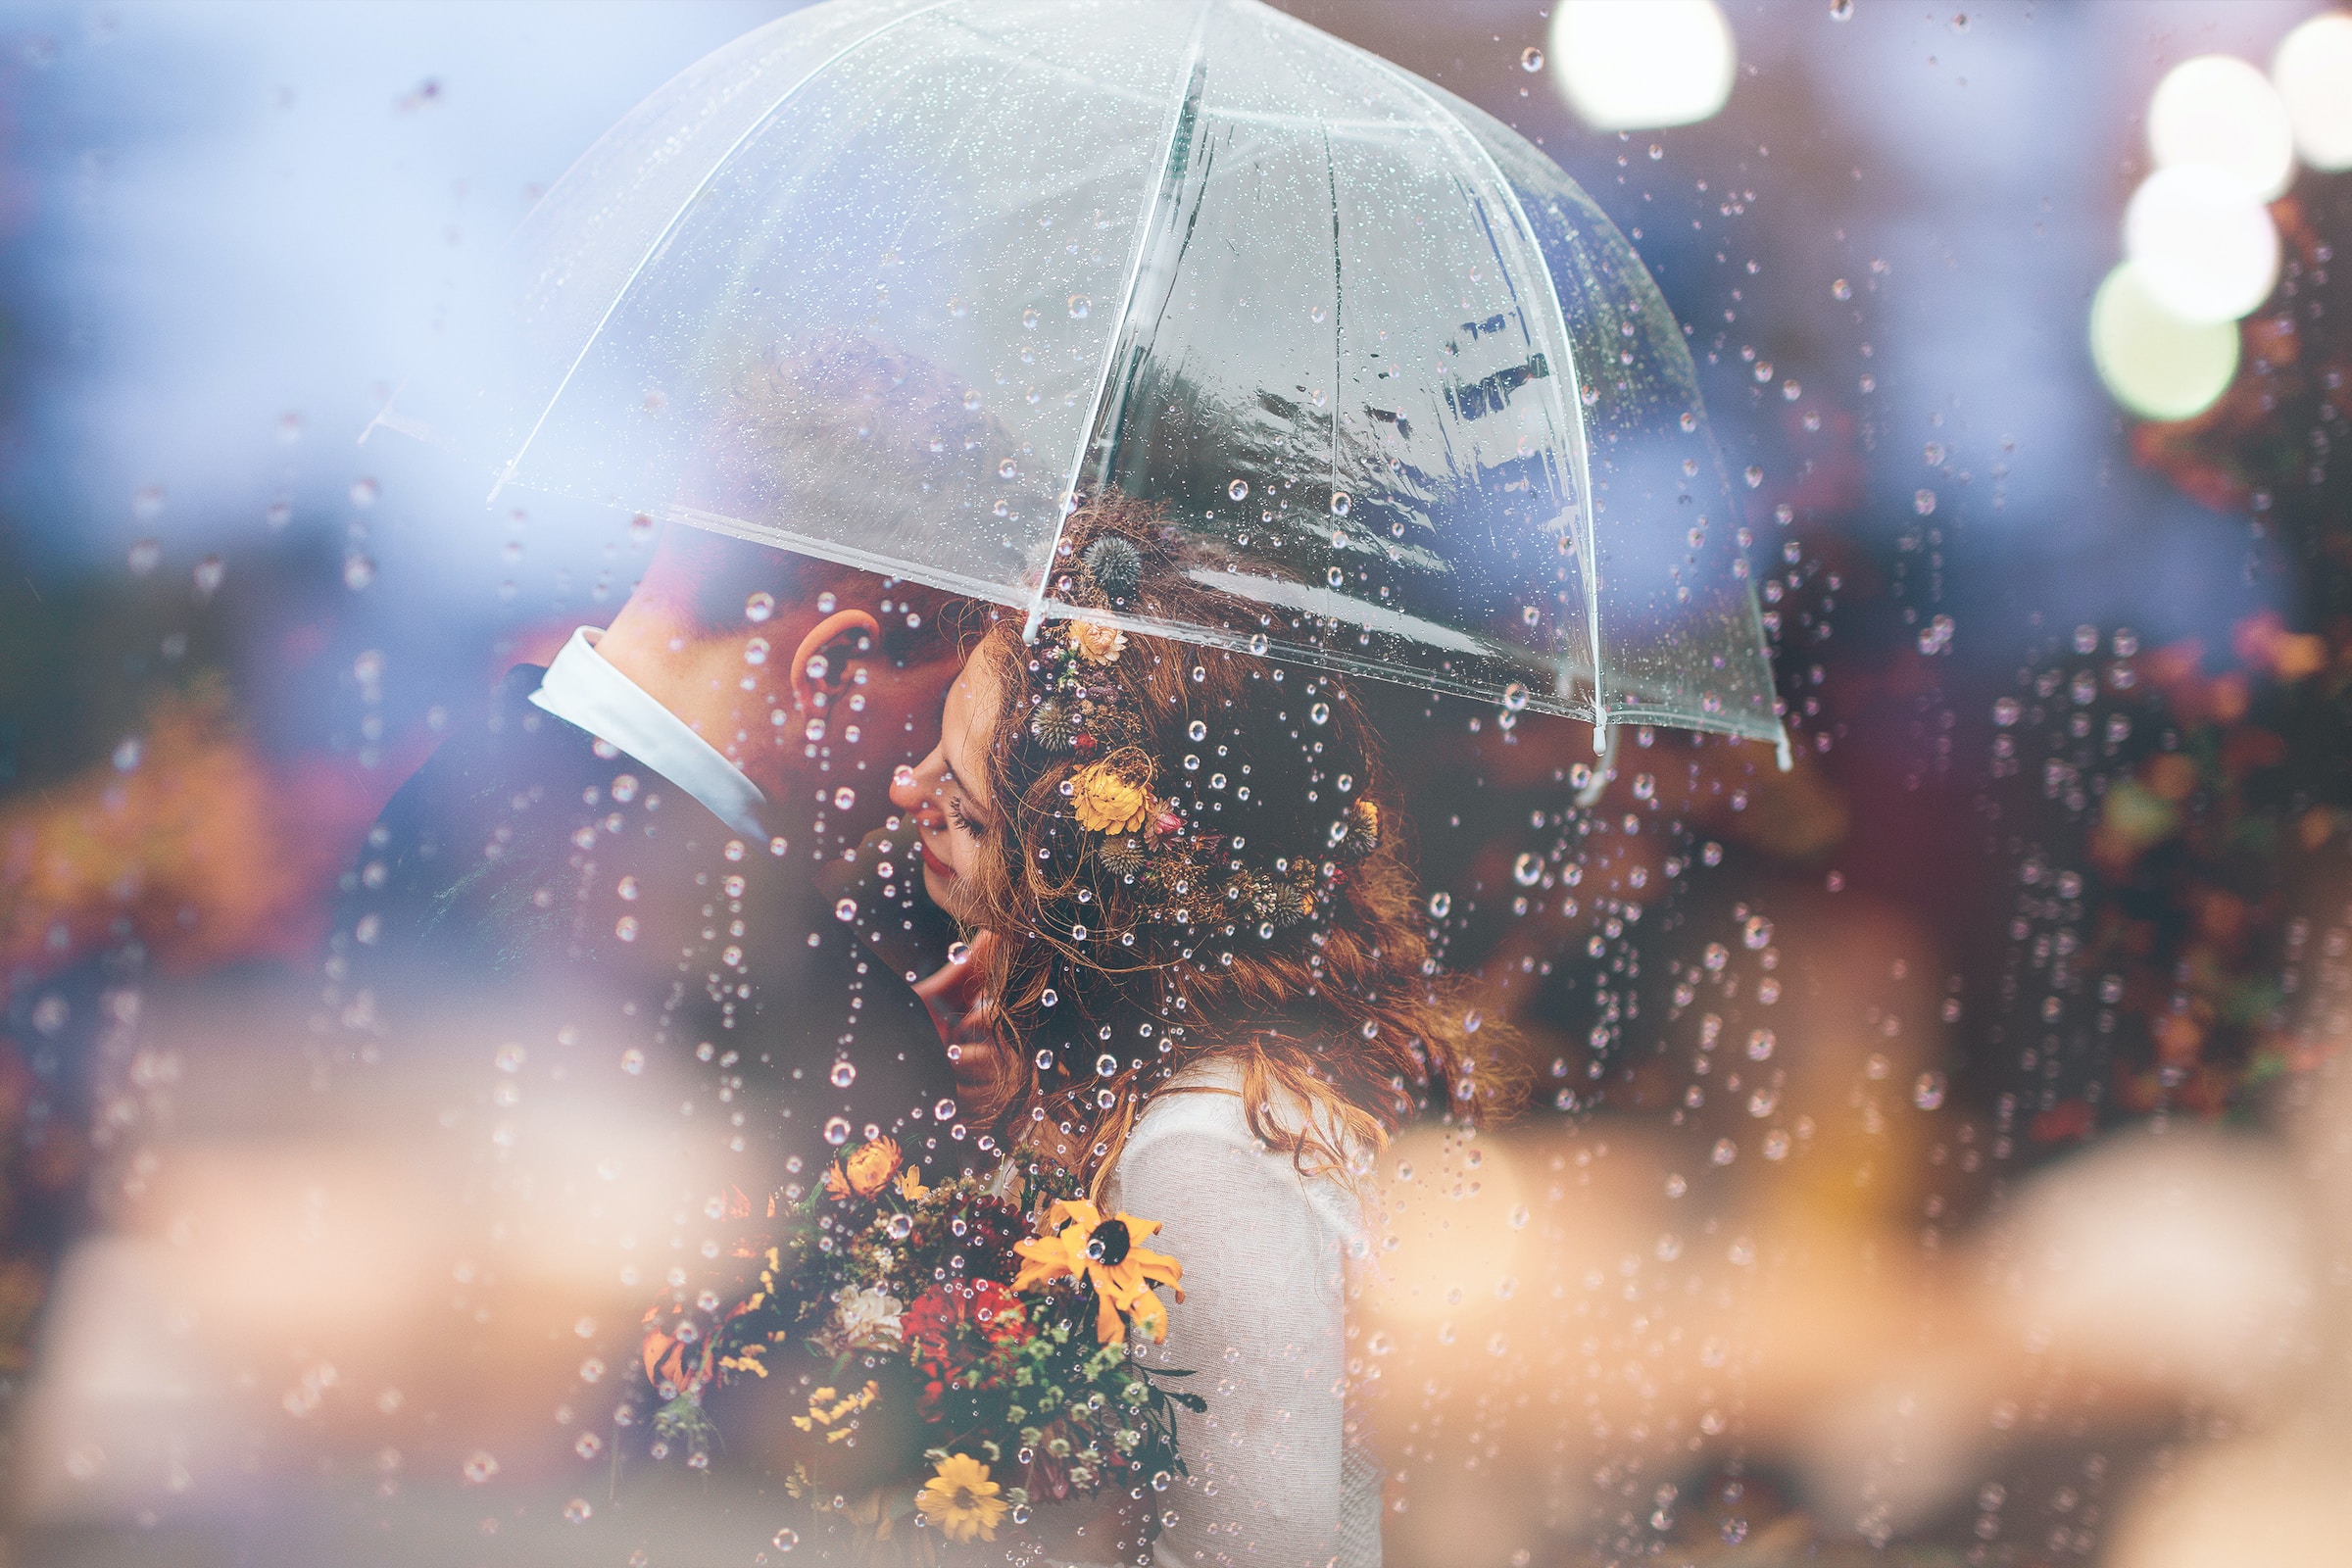 Couple embracing under an umbrella. | Source: Unsplash